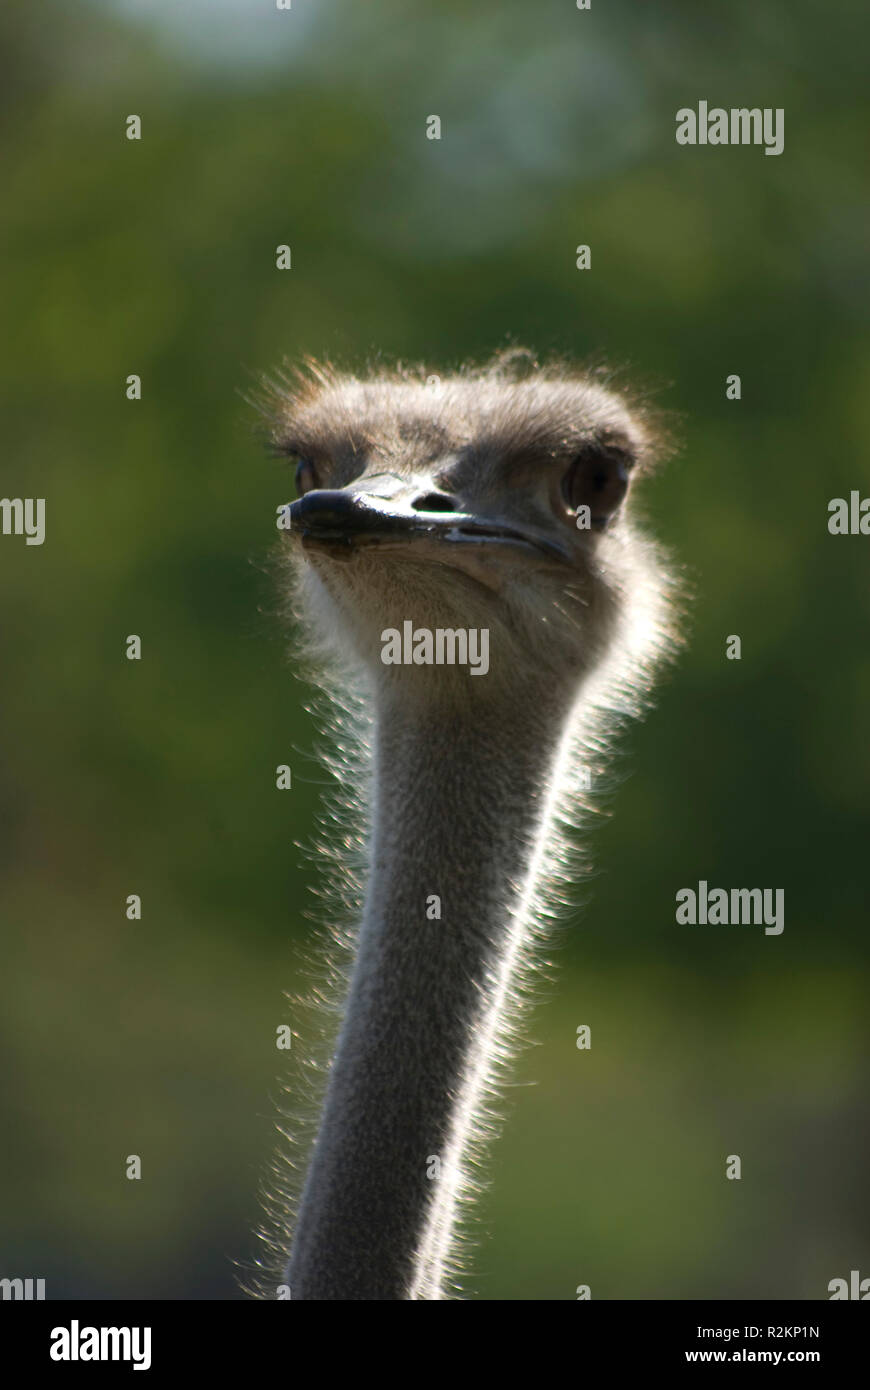 Io sono bellissimo Foto stock - Alamy